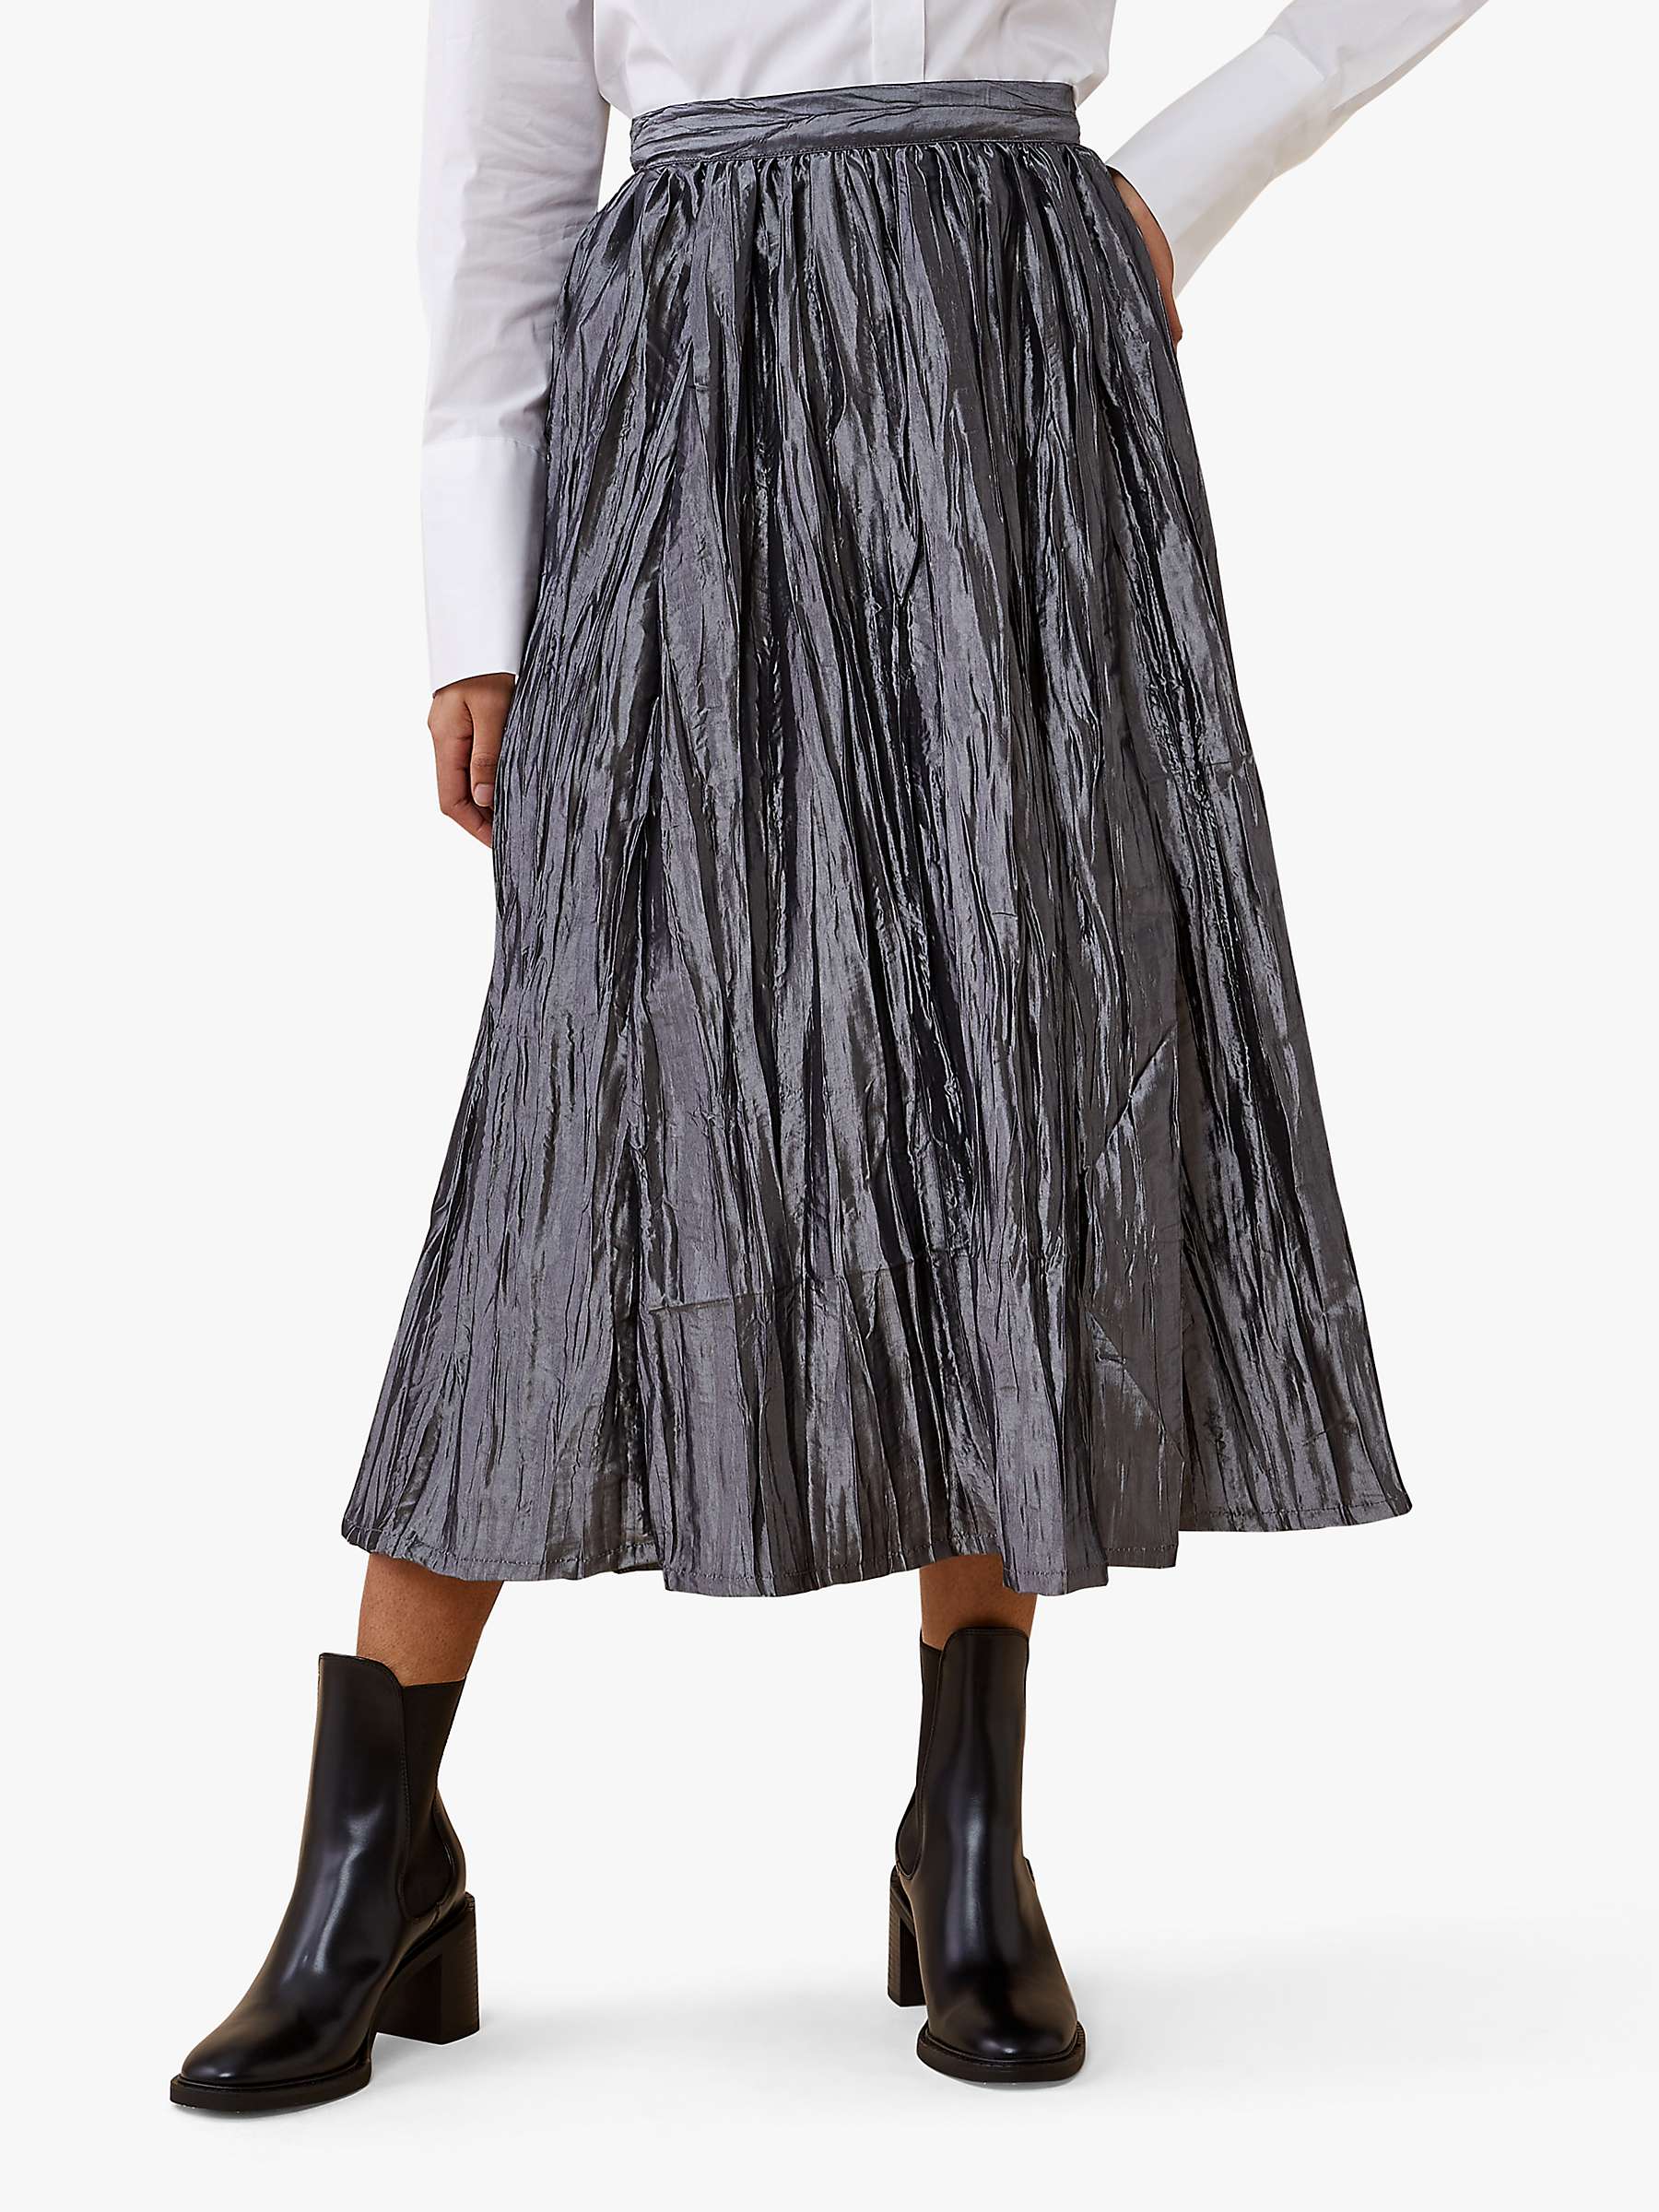 Finery Adena Taffeta Midi Skirt, Silver at John Lewis & Partners